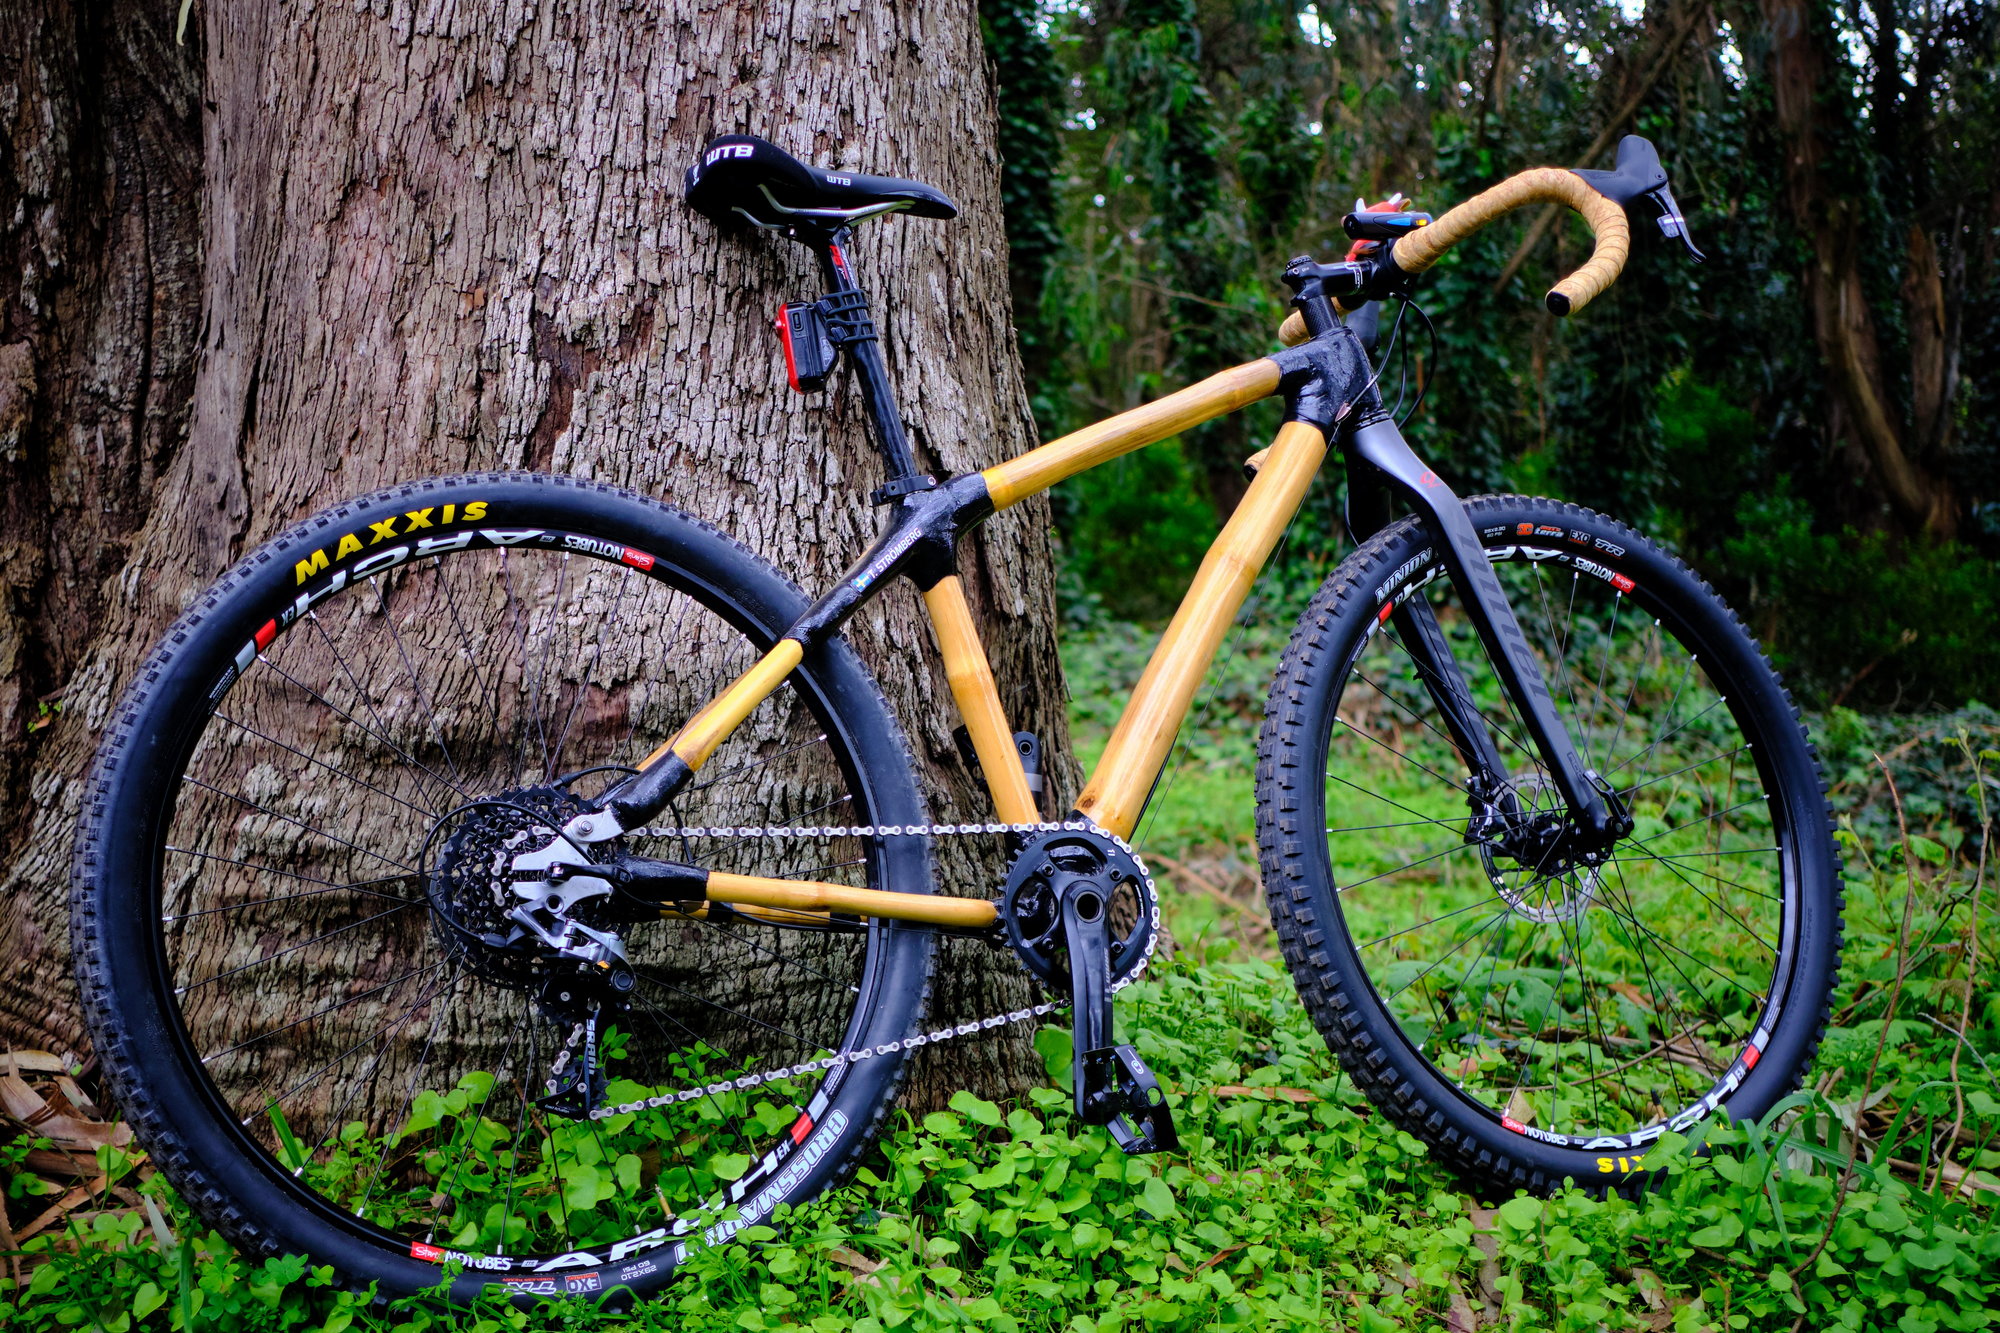 Build thread: Calfee DIY bamboo kit - Page 3 - Bike Forums2000 x 1333